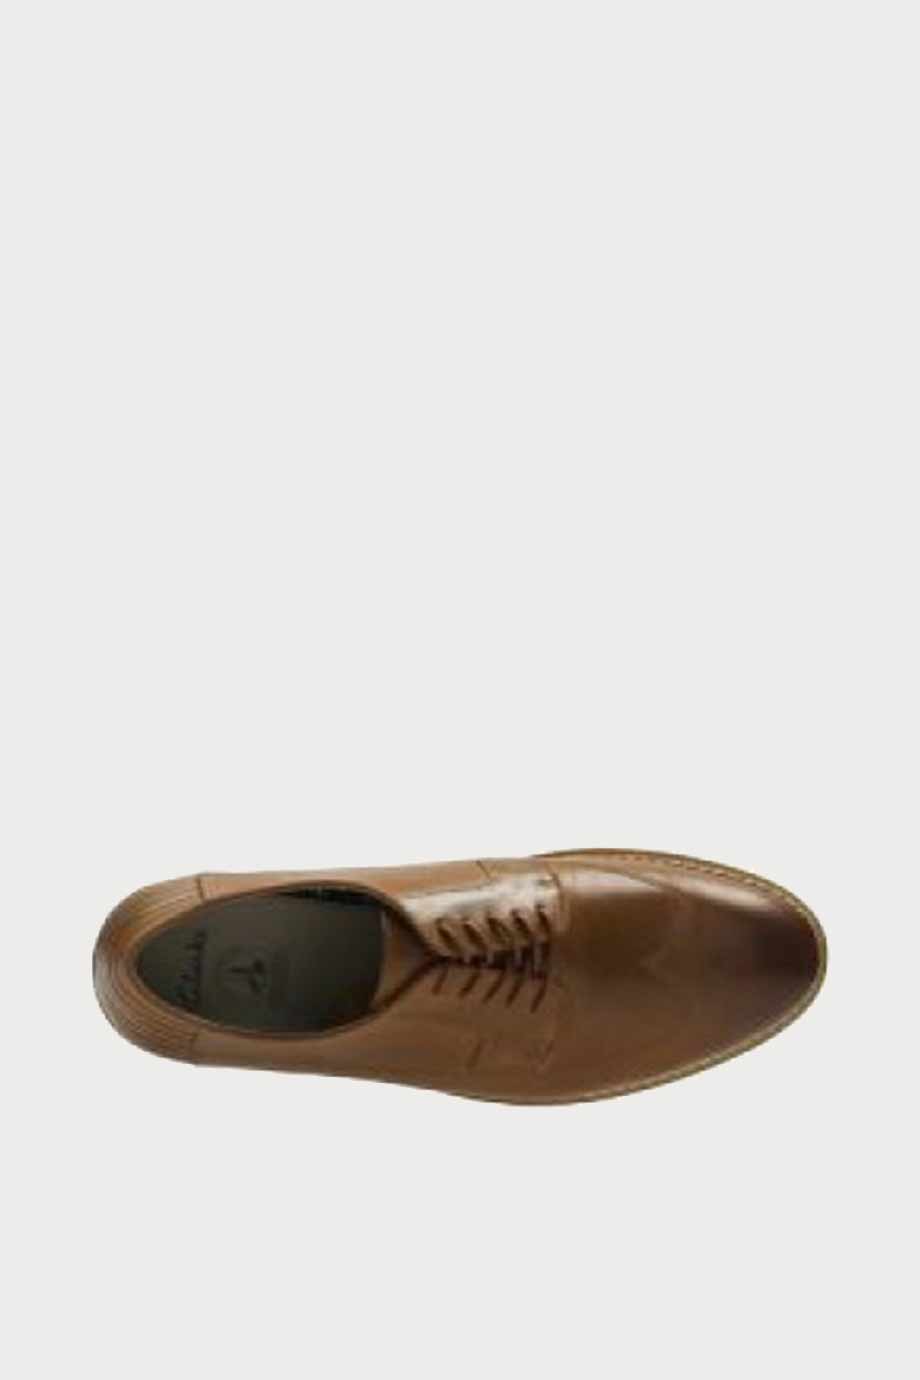 spiridoula metheniti shoes xalkida p Gamberson Style clarks tan leather 3